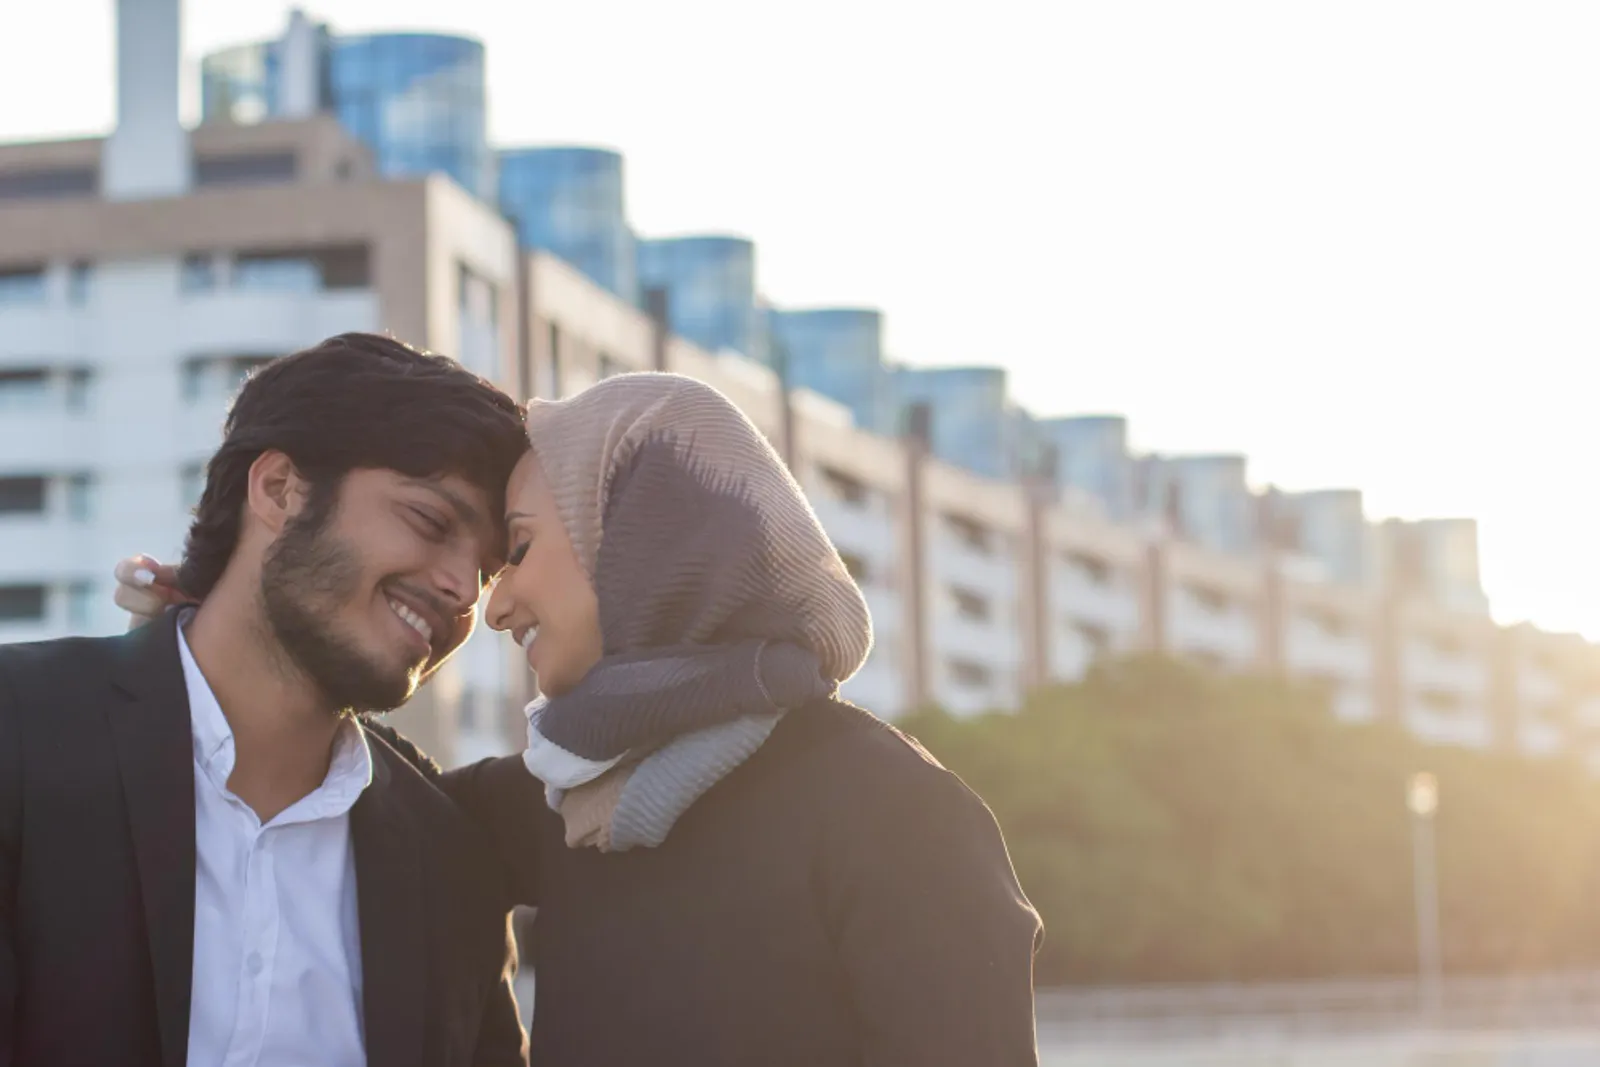 Inilah 5 Bulan yang Baik untuk Menikah Menurut Islam